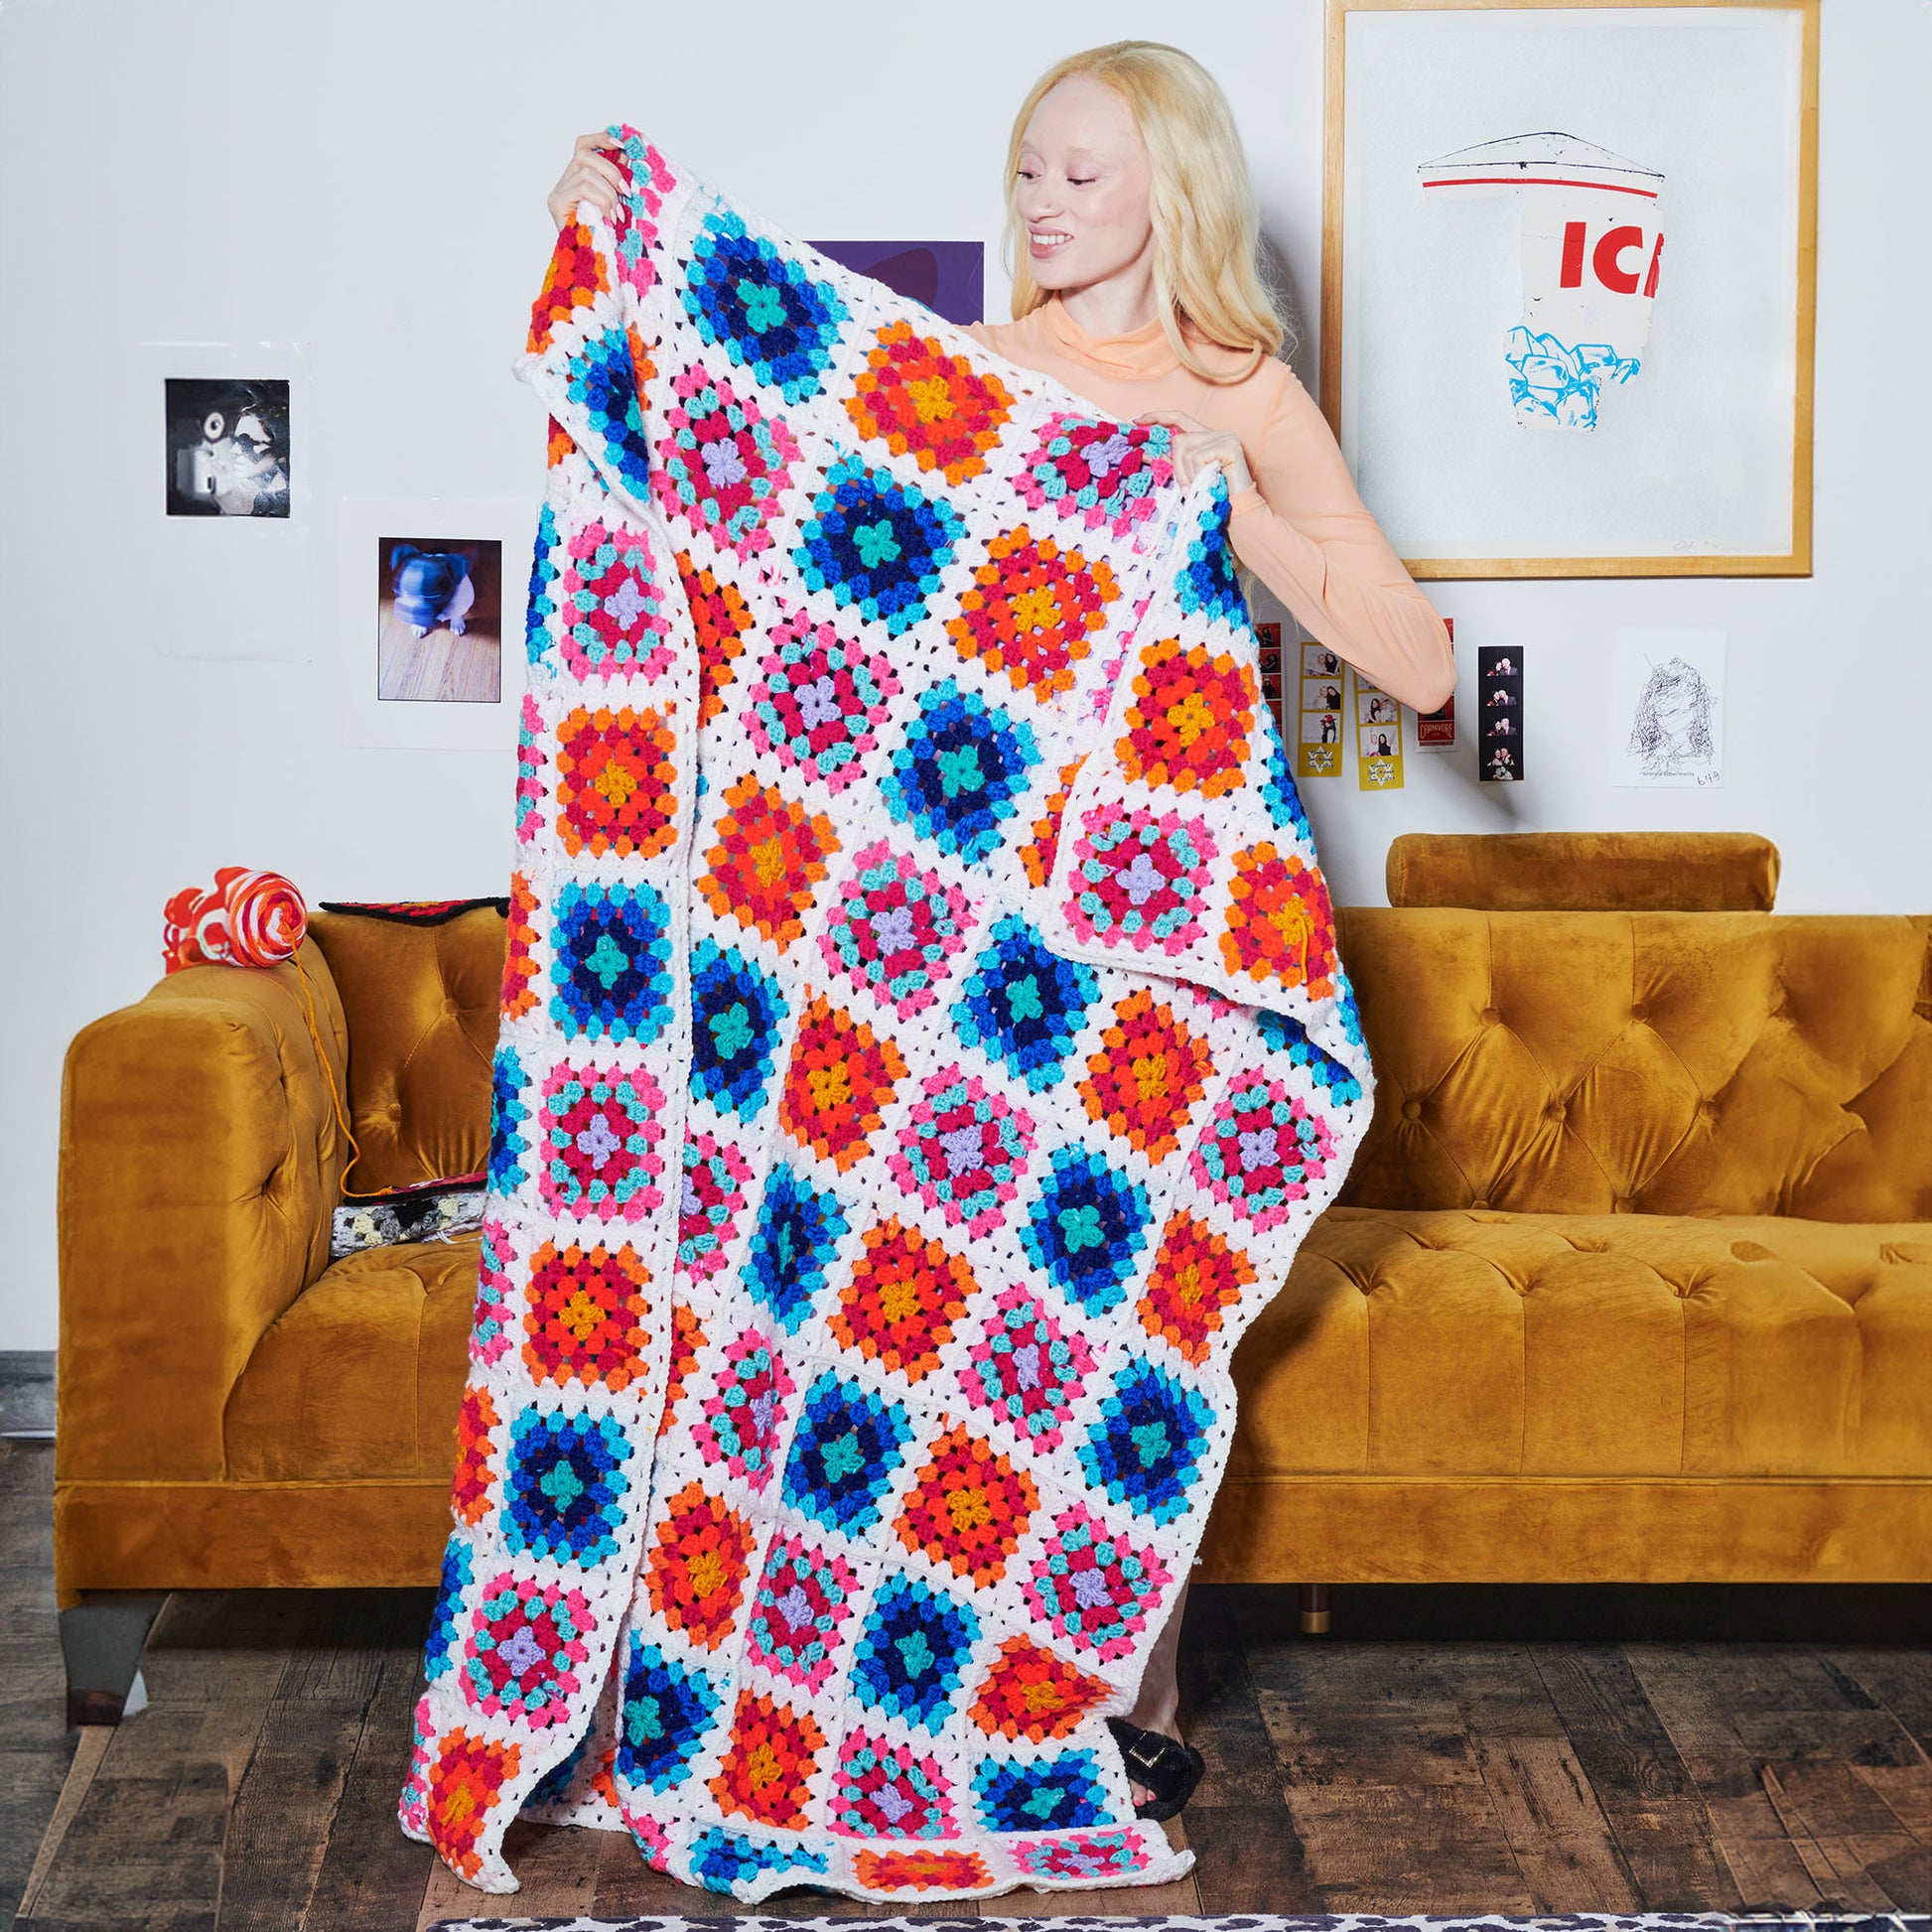 Free Red Heart Spectrum Dreams Crochet Granny Square Blanket Pattern